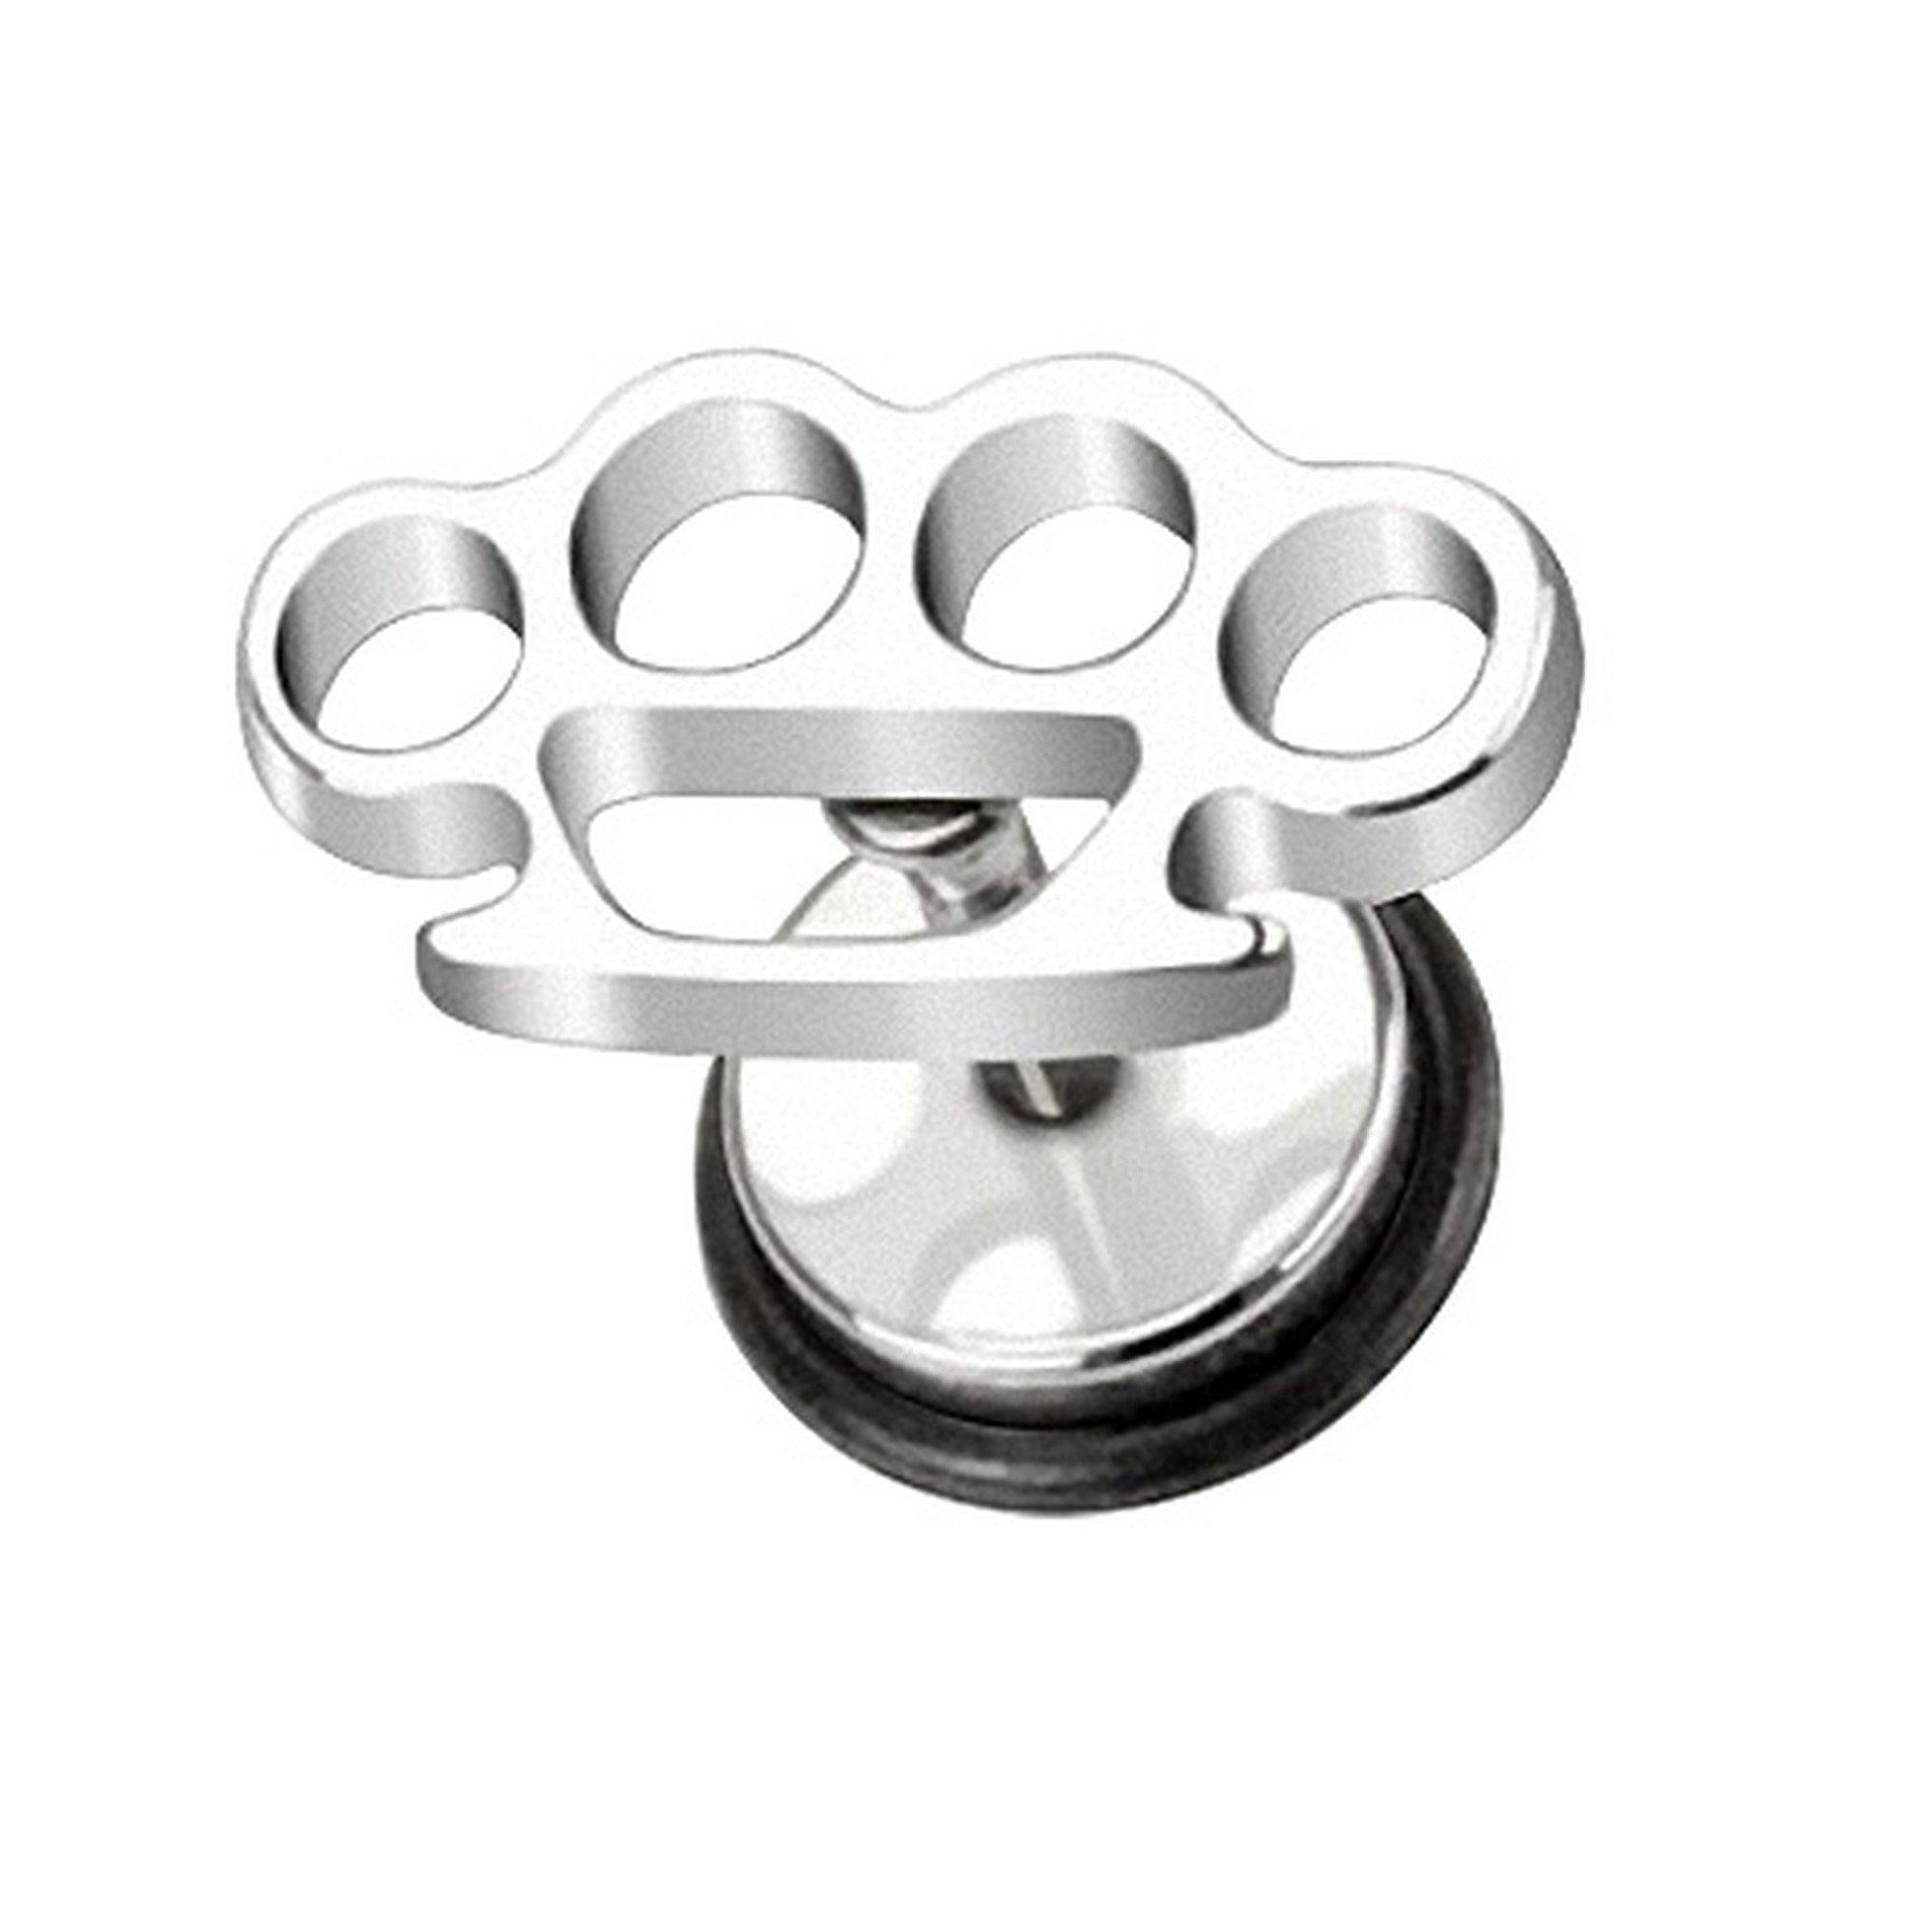 Taffstyle Piercing-Set Piercing Ohr Plug mit Schlagring Style, Piercing Ohrring Ohrstecker Fake Piercing Ohr Plug Schlagring Style